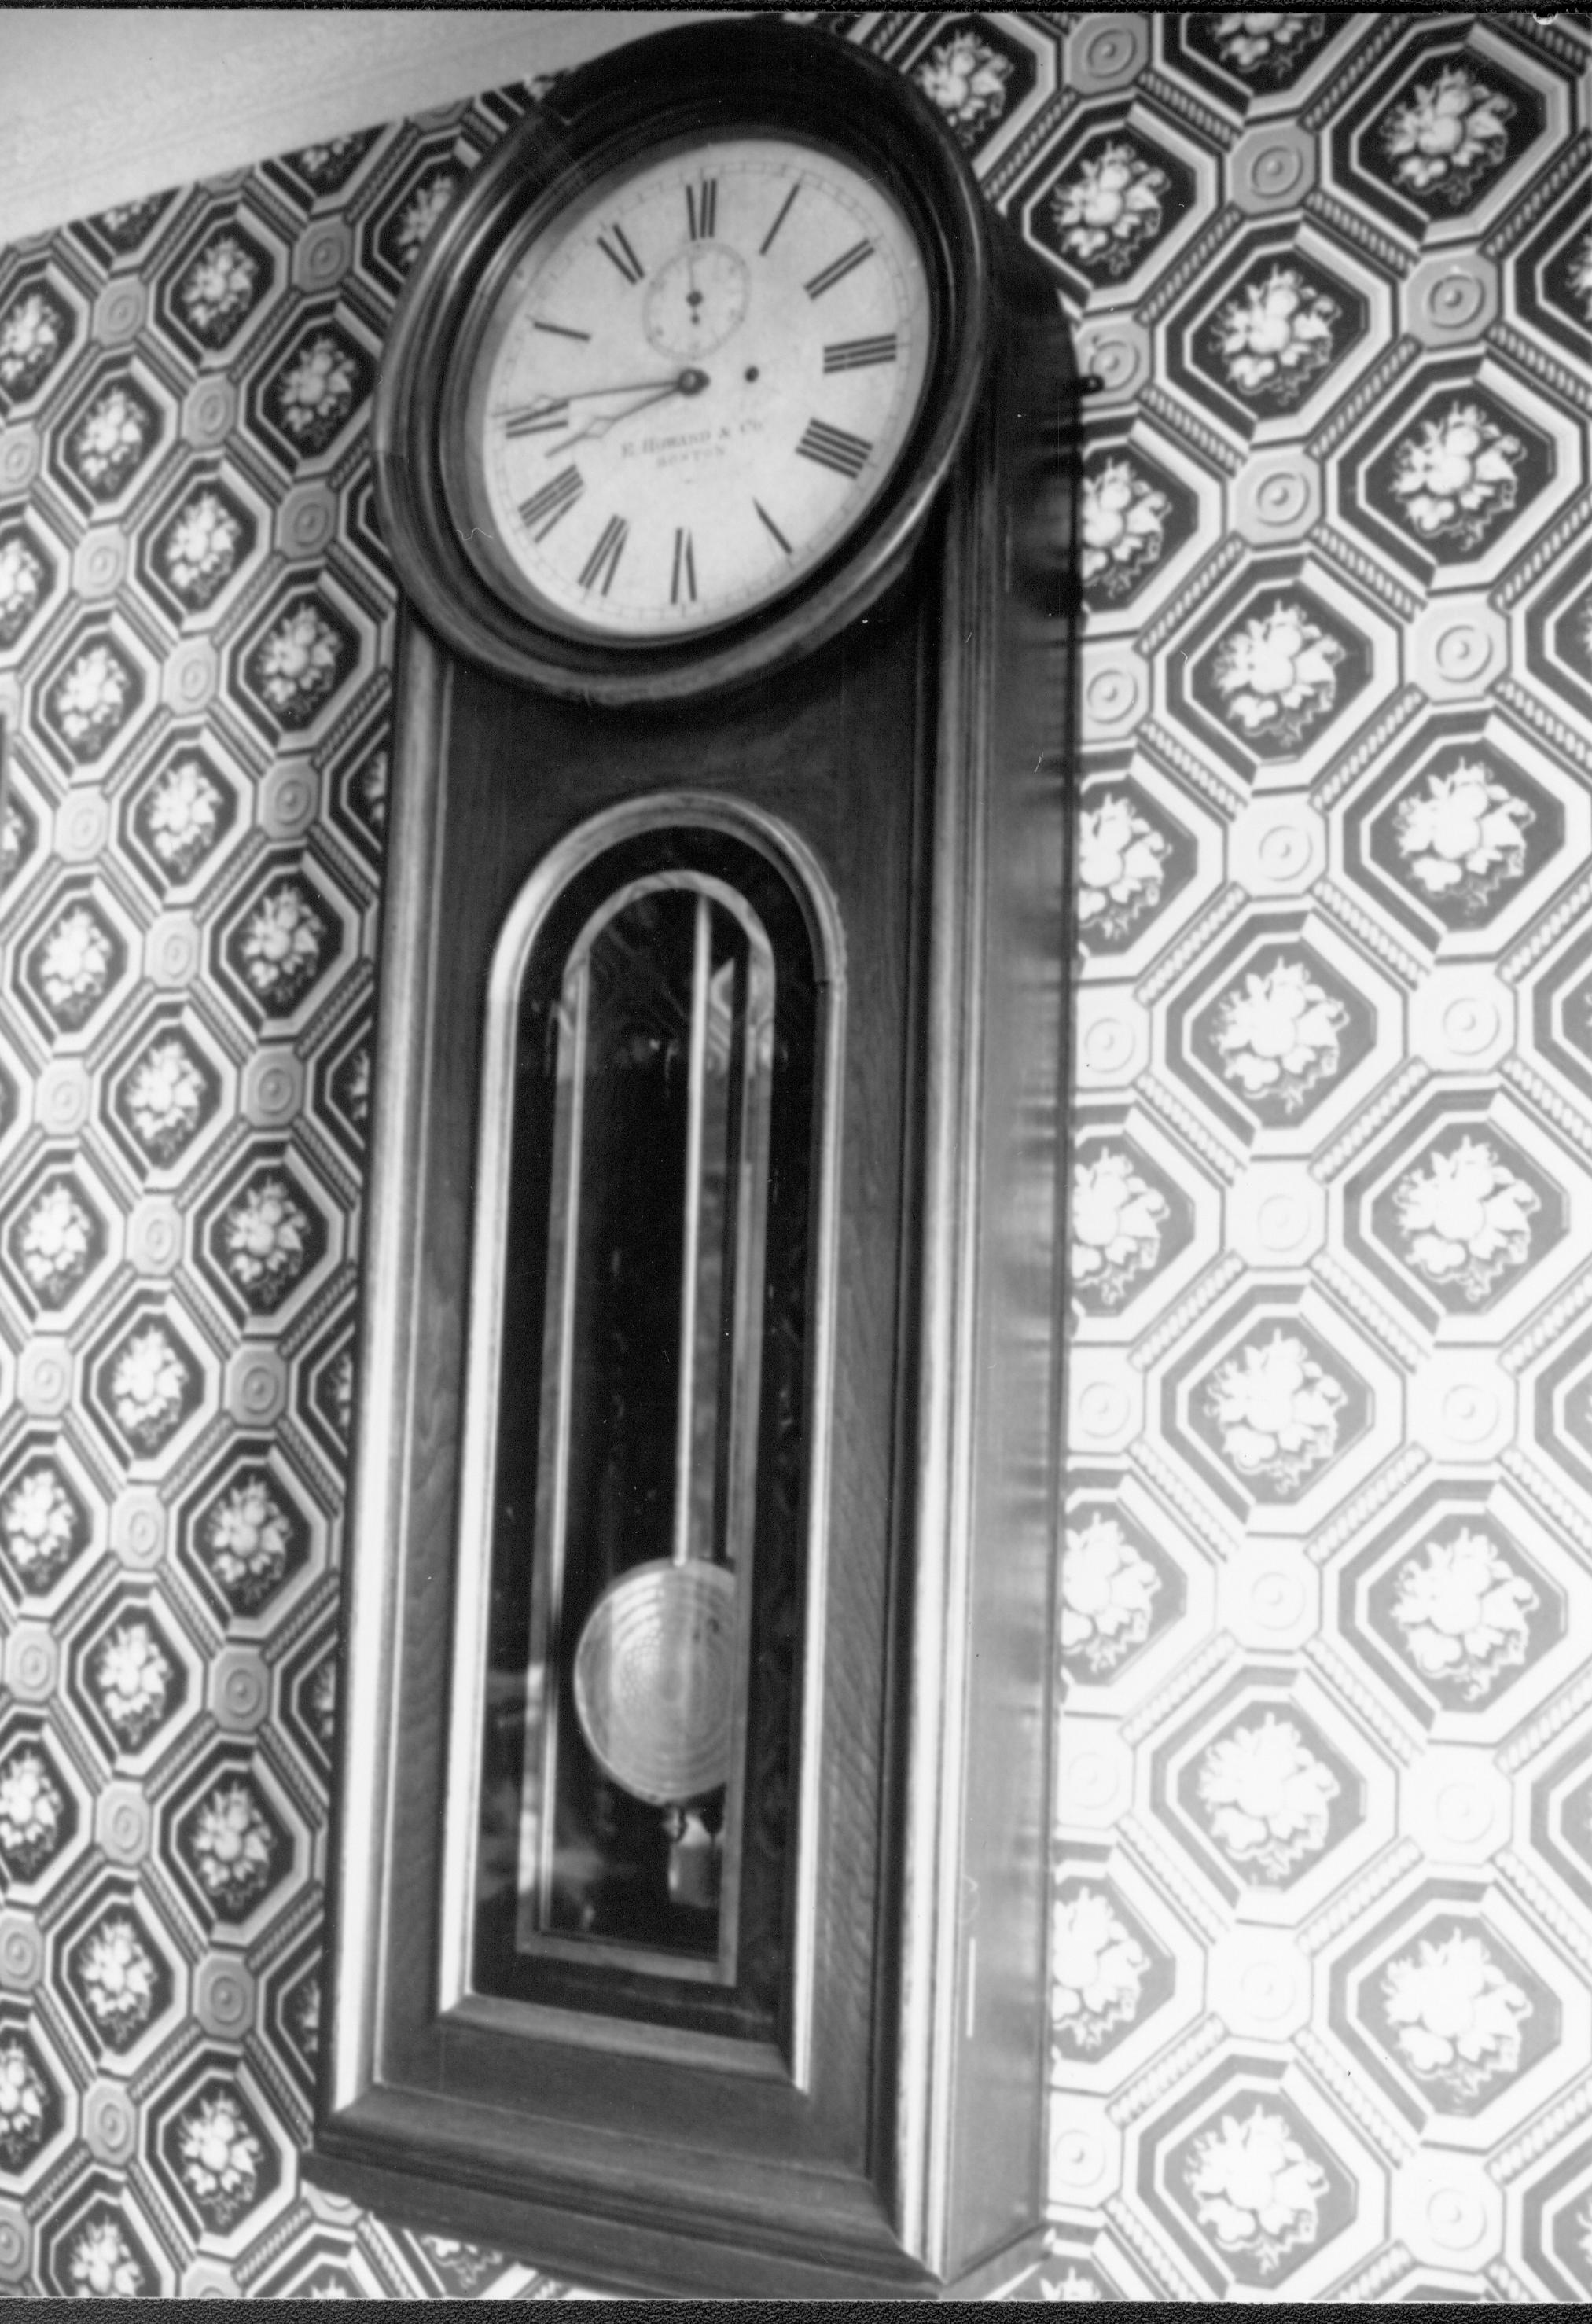 NA LIHO- 54 Unknown Wall Clock furnishings, clock